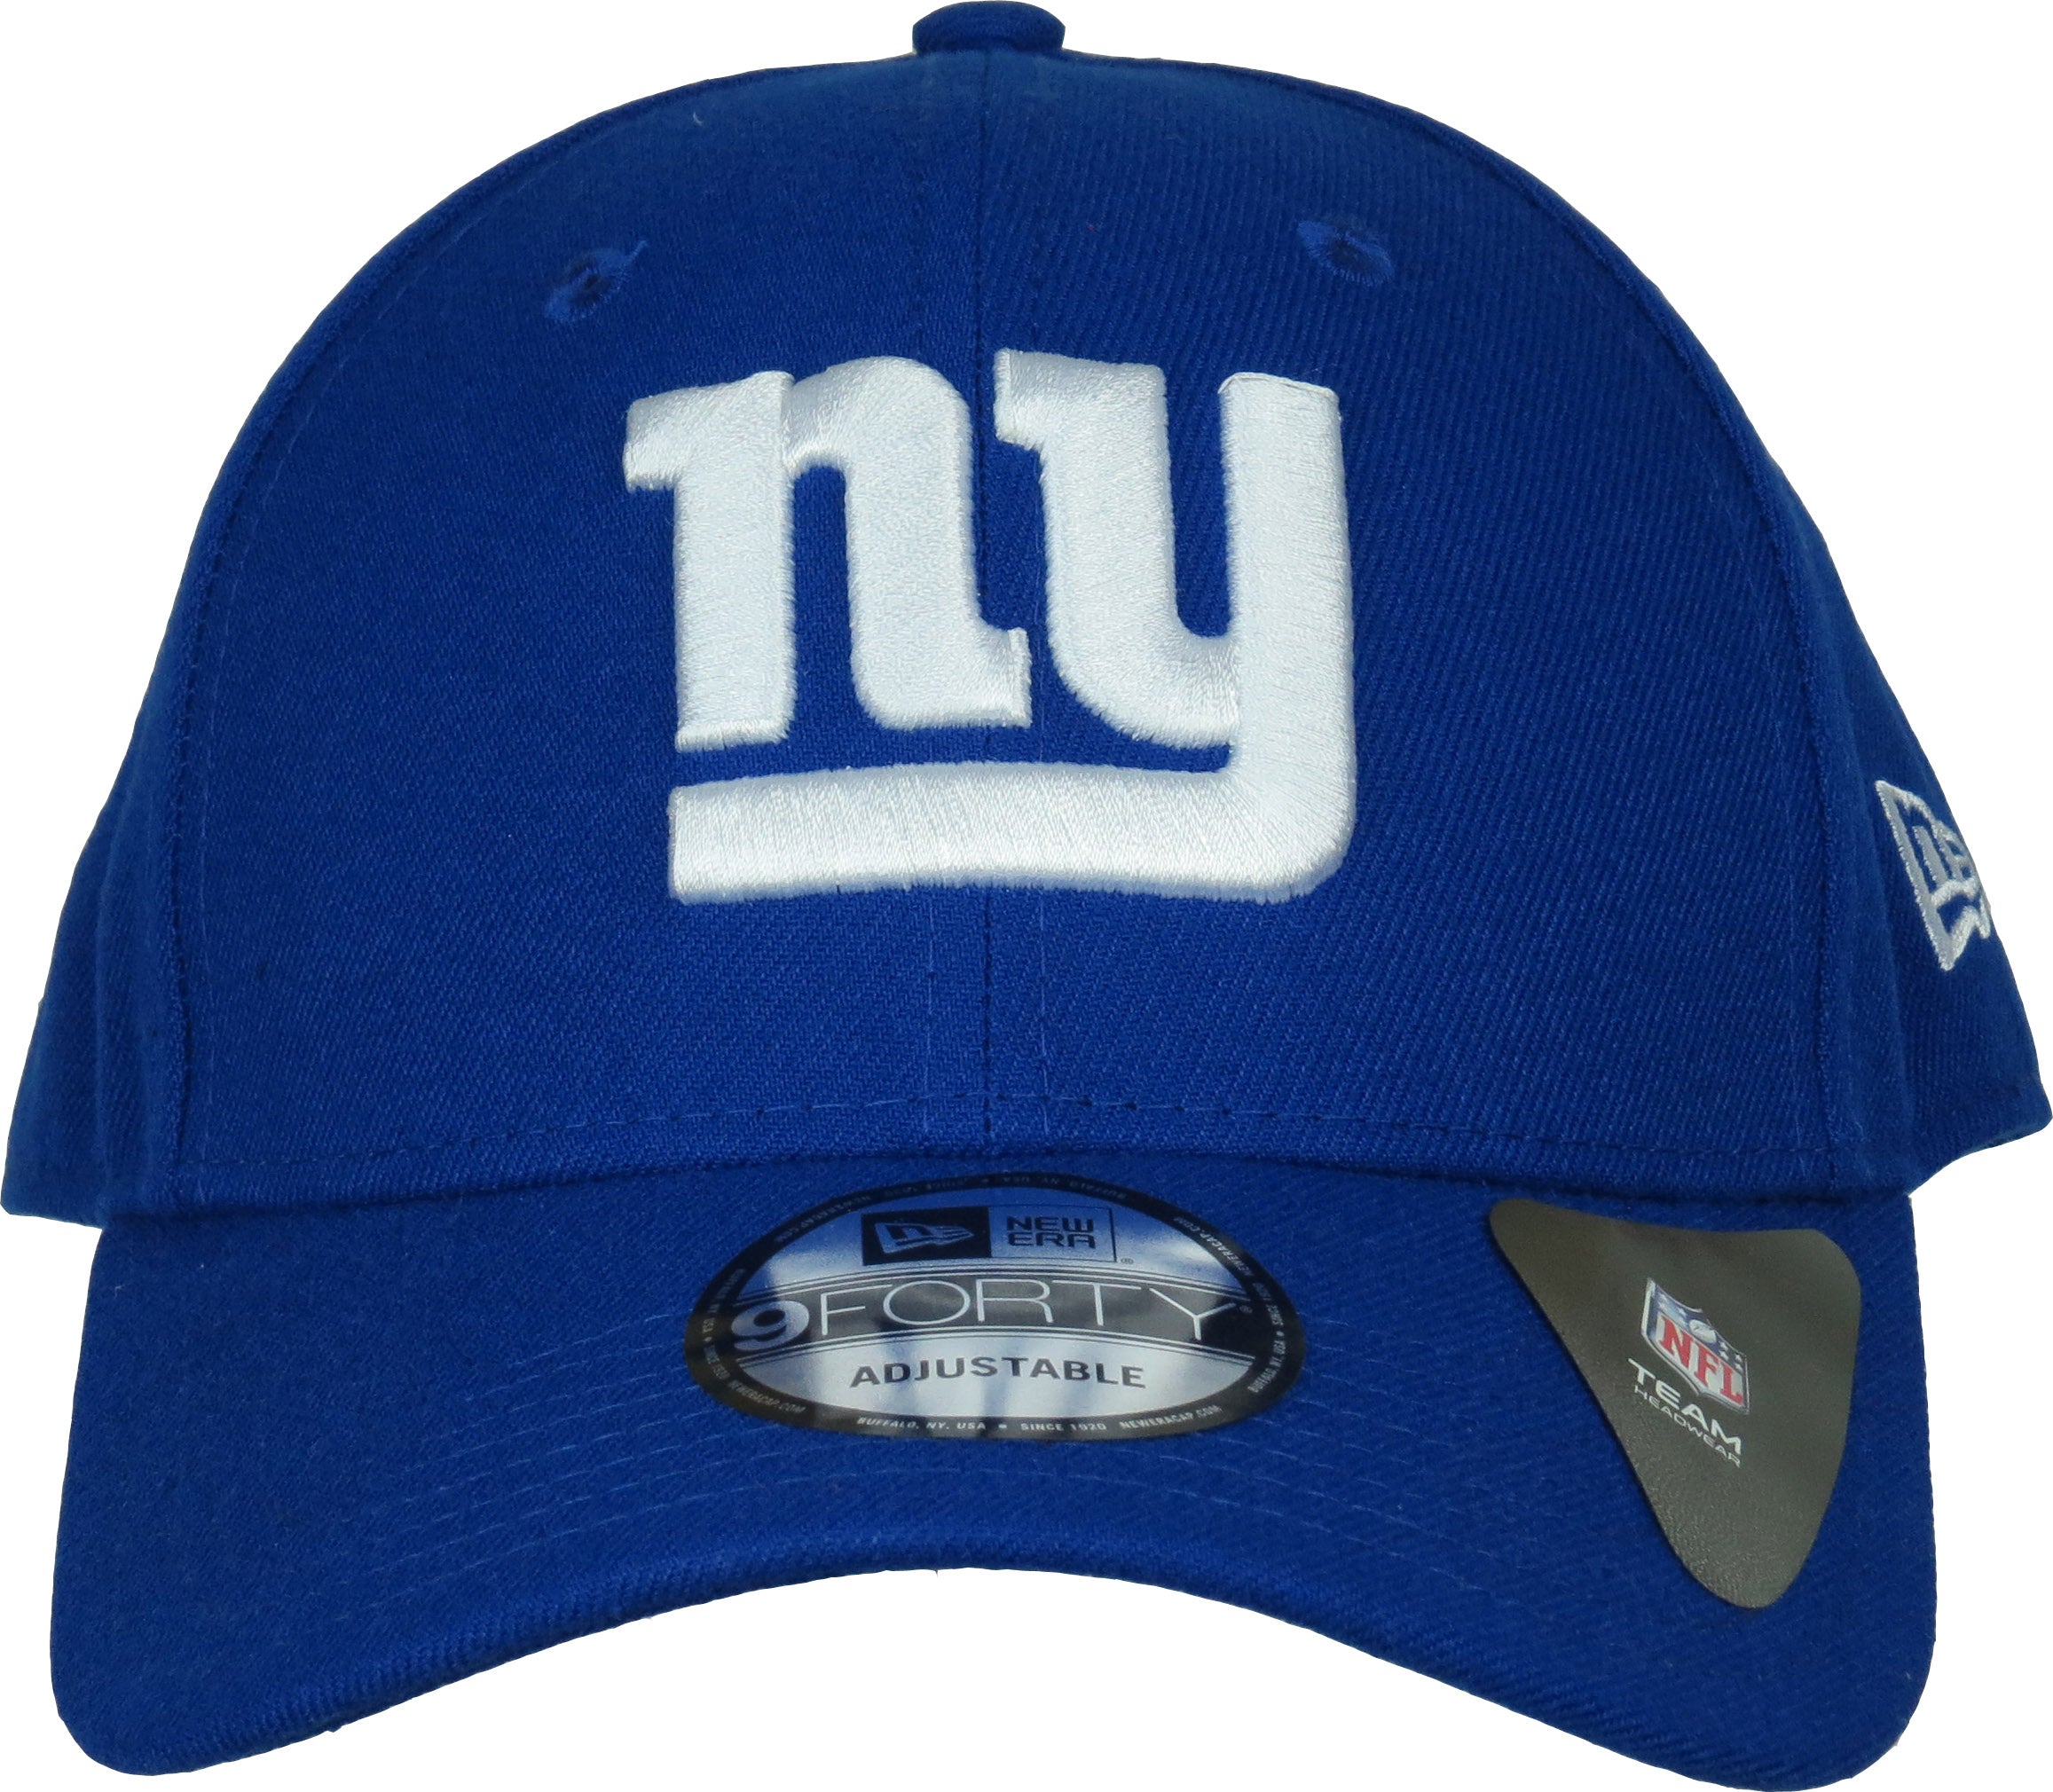 New York Giants New Era 940 The League NFL Adjustable Cap lovemycap